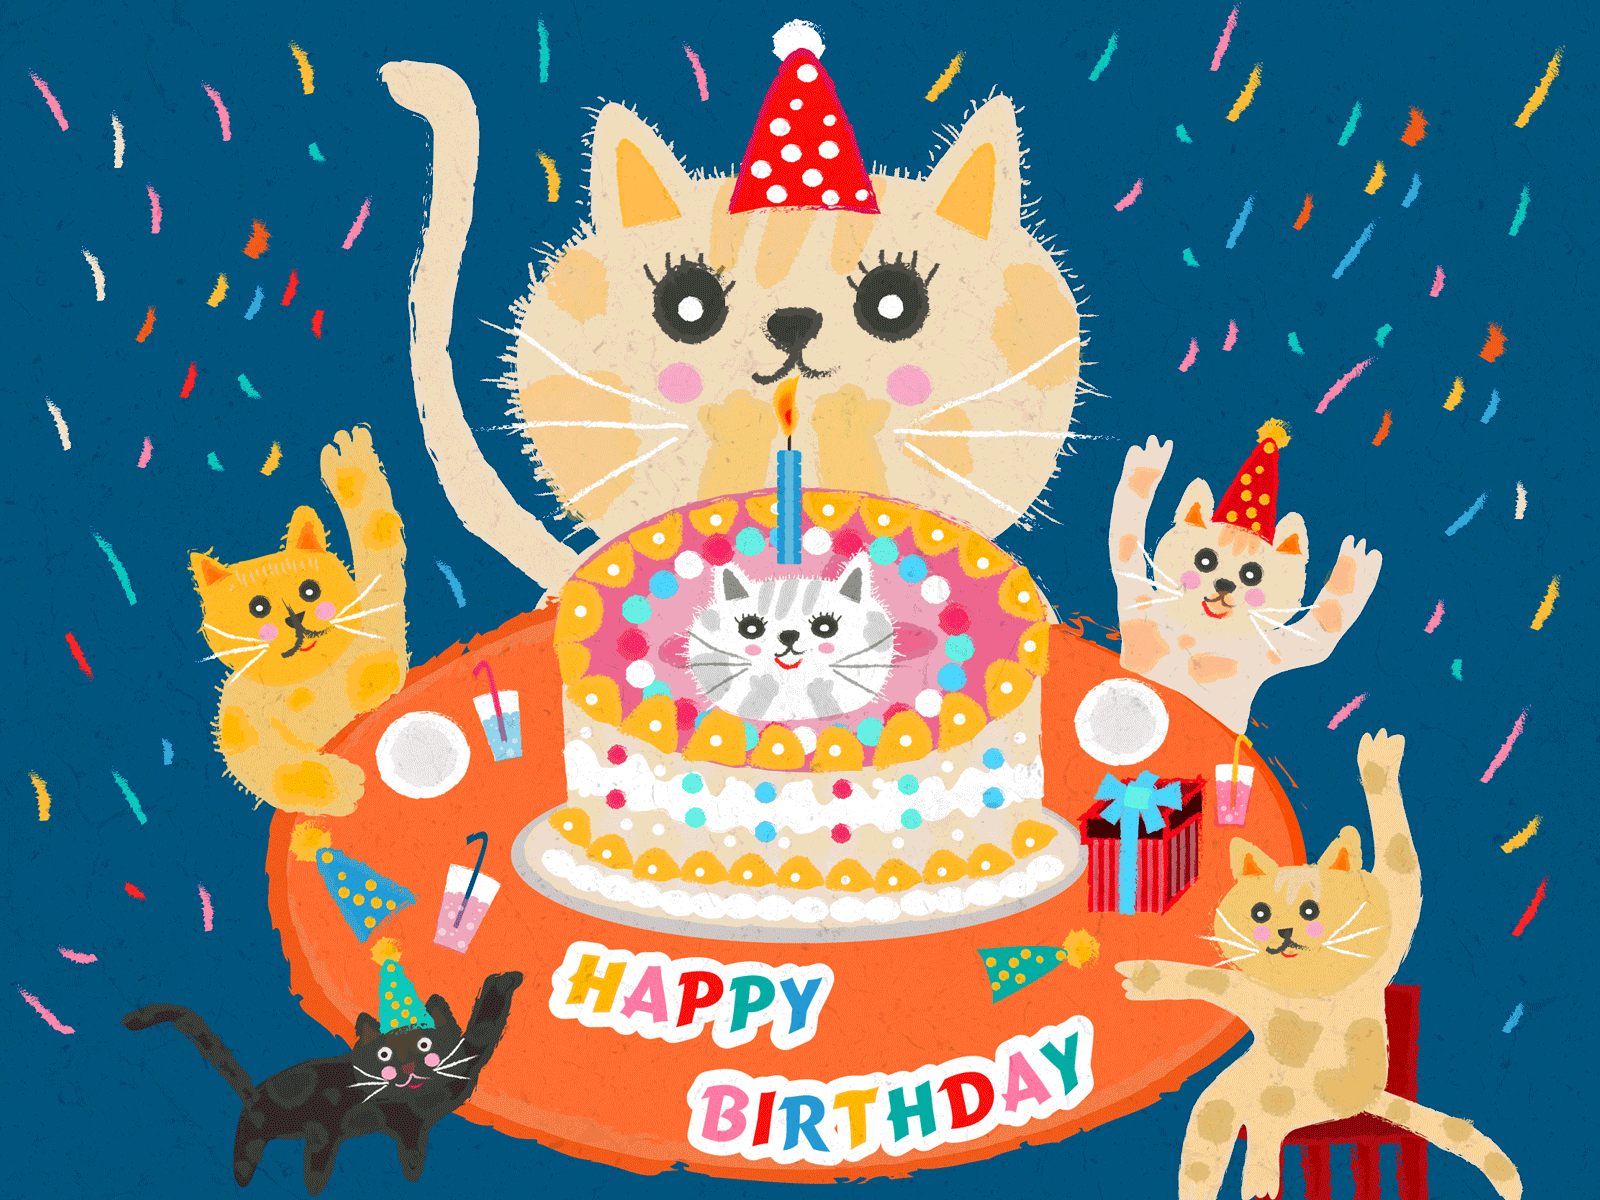 Birthday card birthday card cake cat gif illustration many cats play